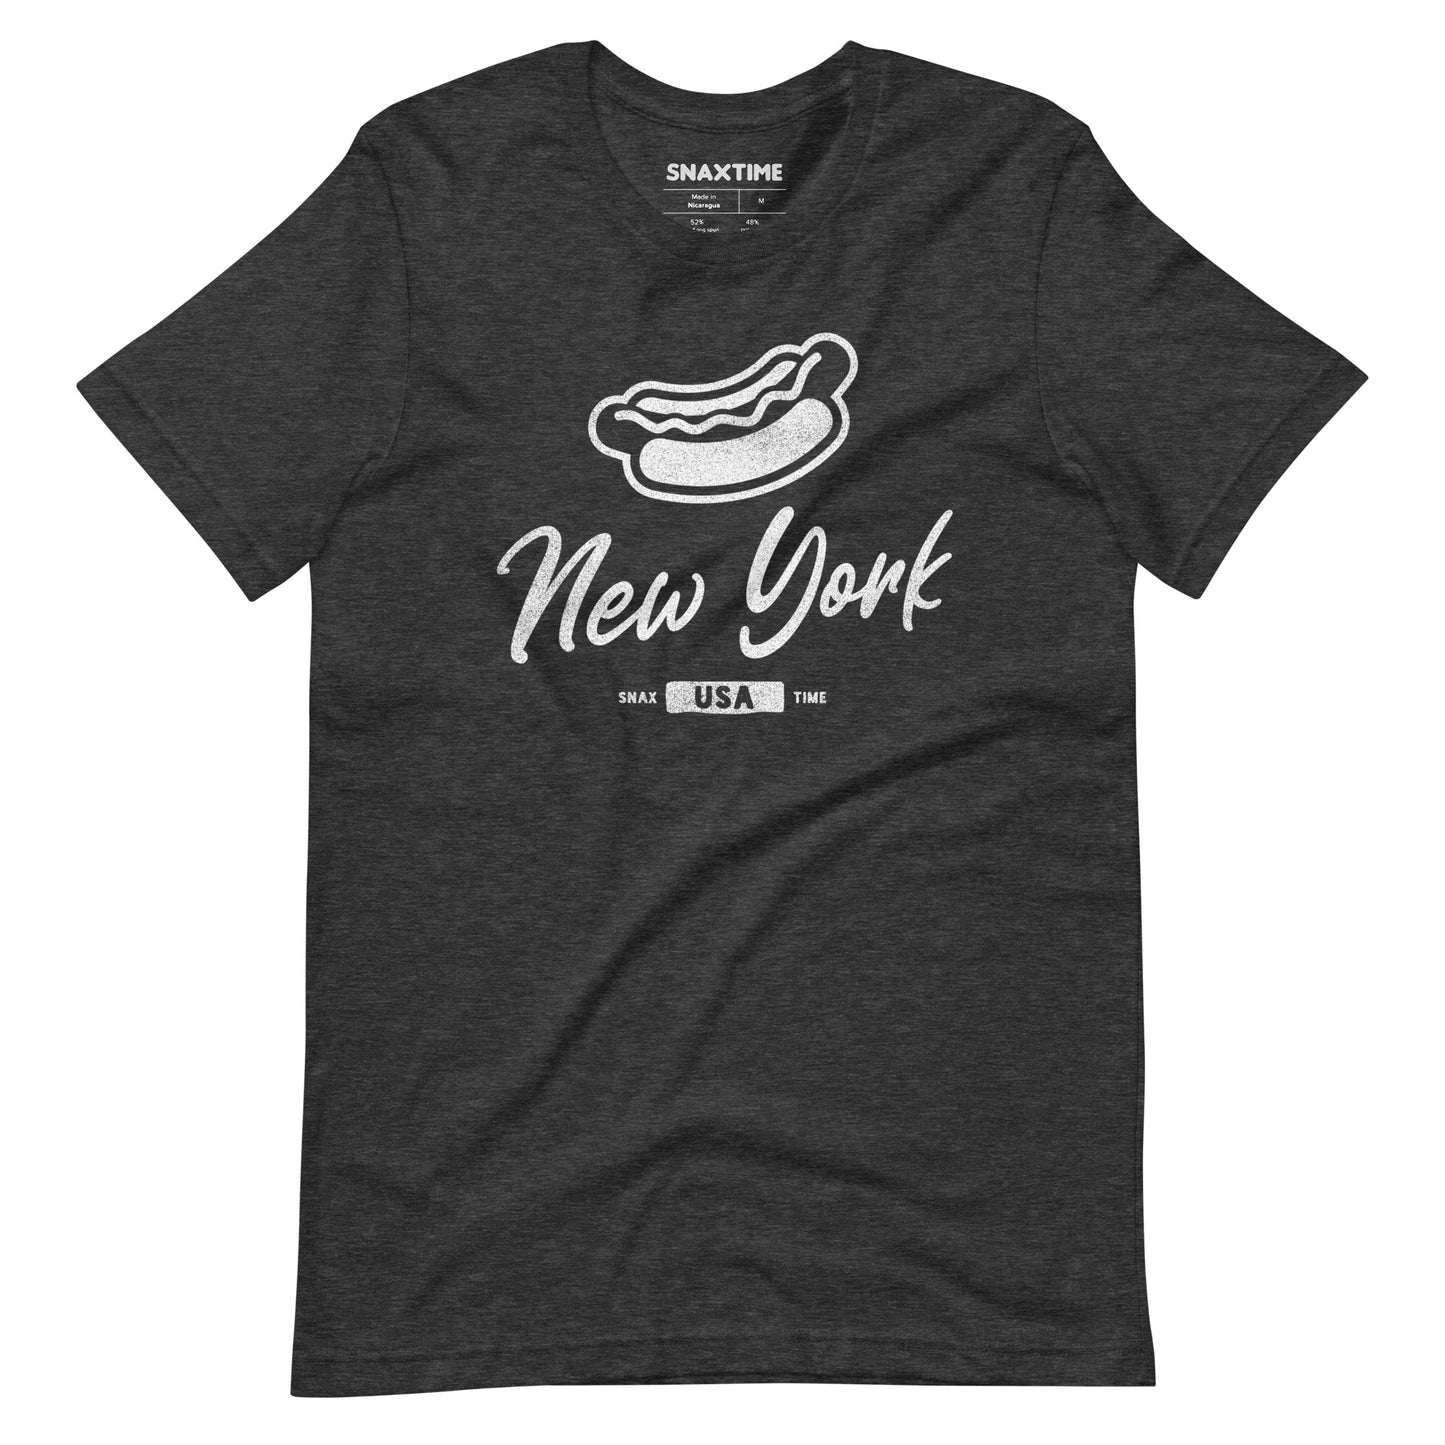 Dark Grey Heather New York City Hot Dog Graphic T-Shirt by Snaxtime